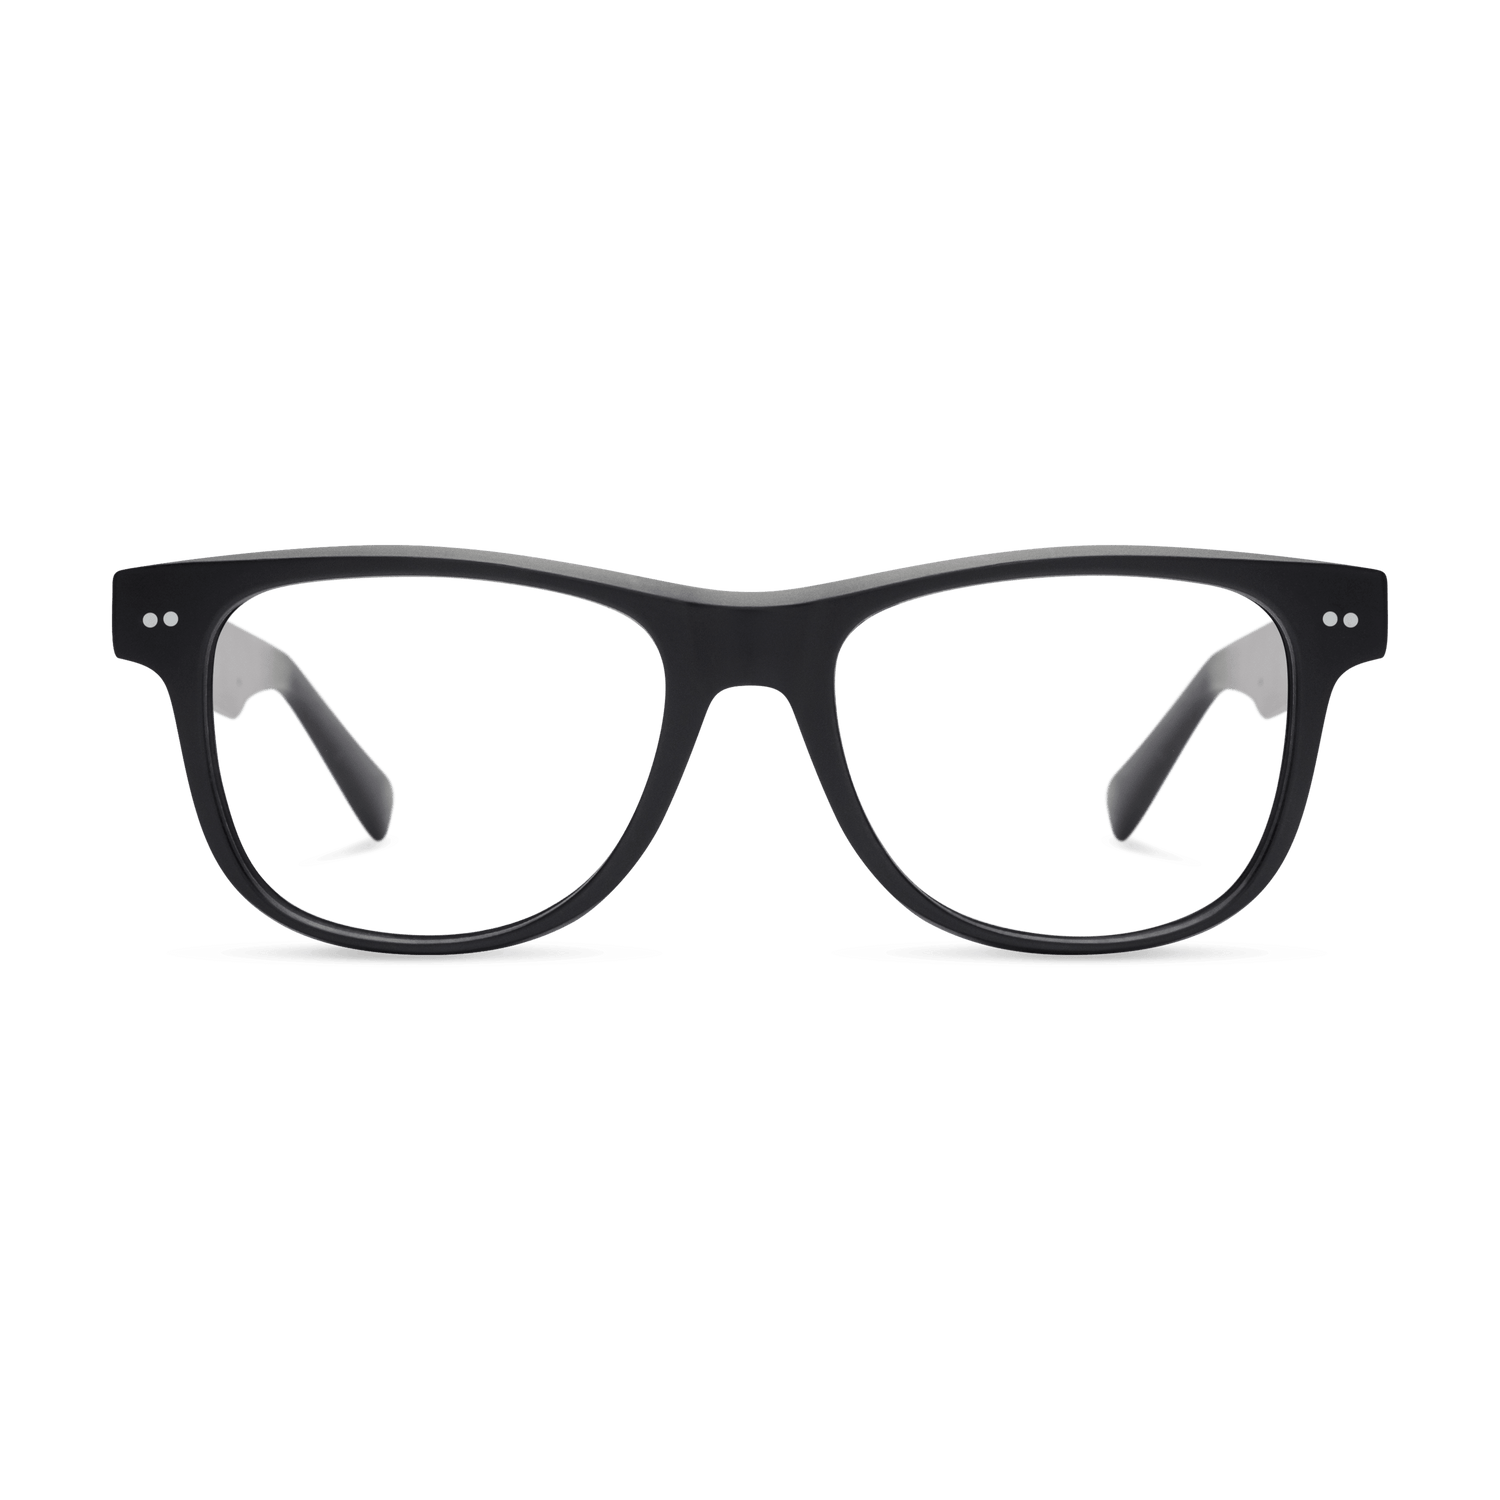 Sullivan Readers Eyeglasses LOOK OPTIC (Black) +1.00 